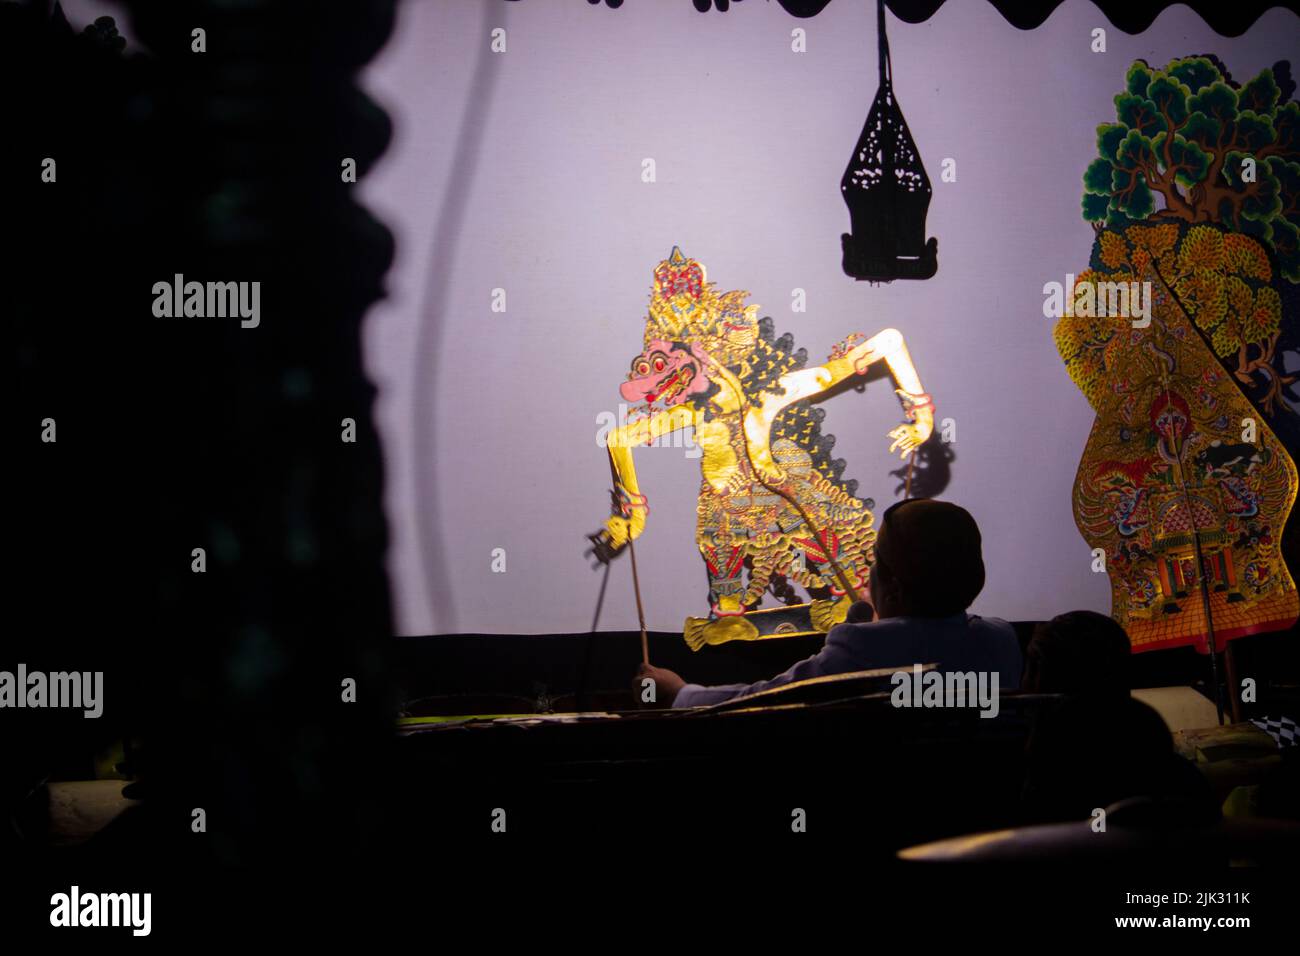 wayang kulit o marionette ombra da Giava, mostra marionette indonesiana di dalang o burattinaio . Wayang in pelle Foto Stock